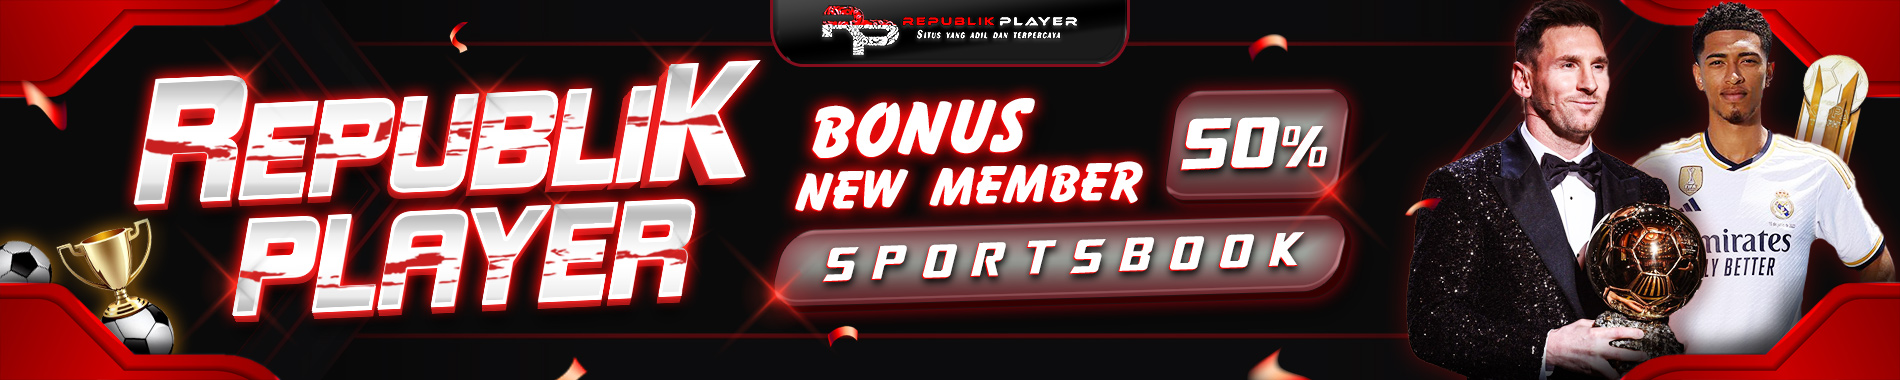 RepublikPlayer-Bonus-New-Member-Sportsbook